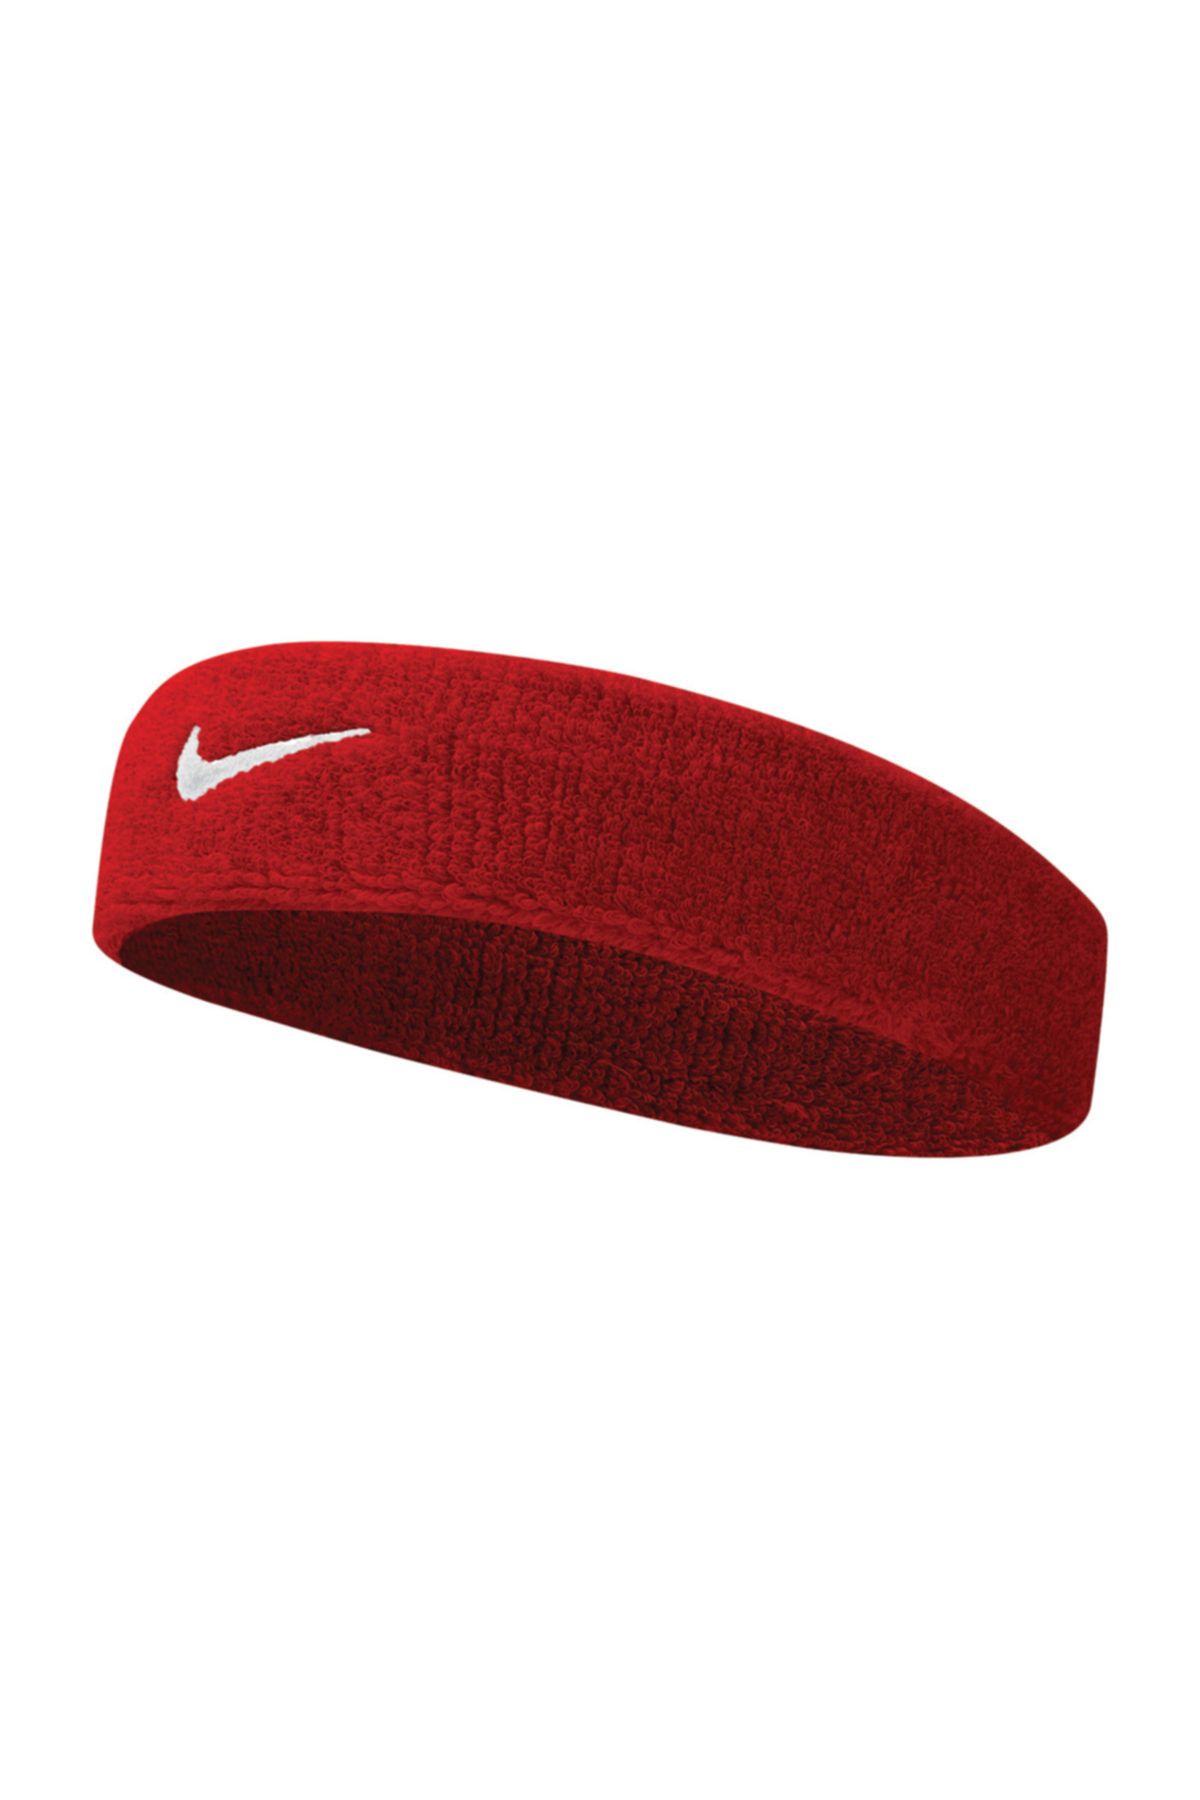 Nike Saç Bandı - Swoosh Alın Ter Bandı - N.NN.07.619.OS